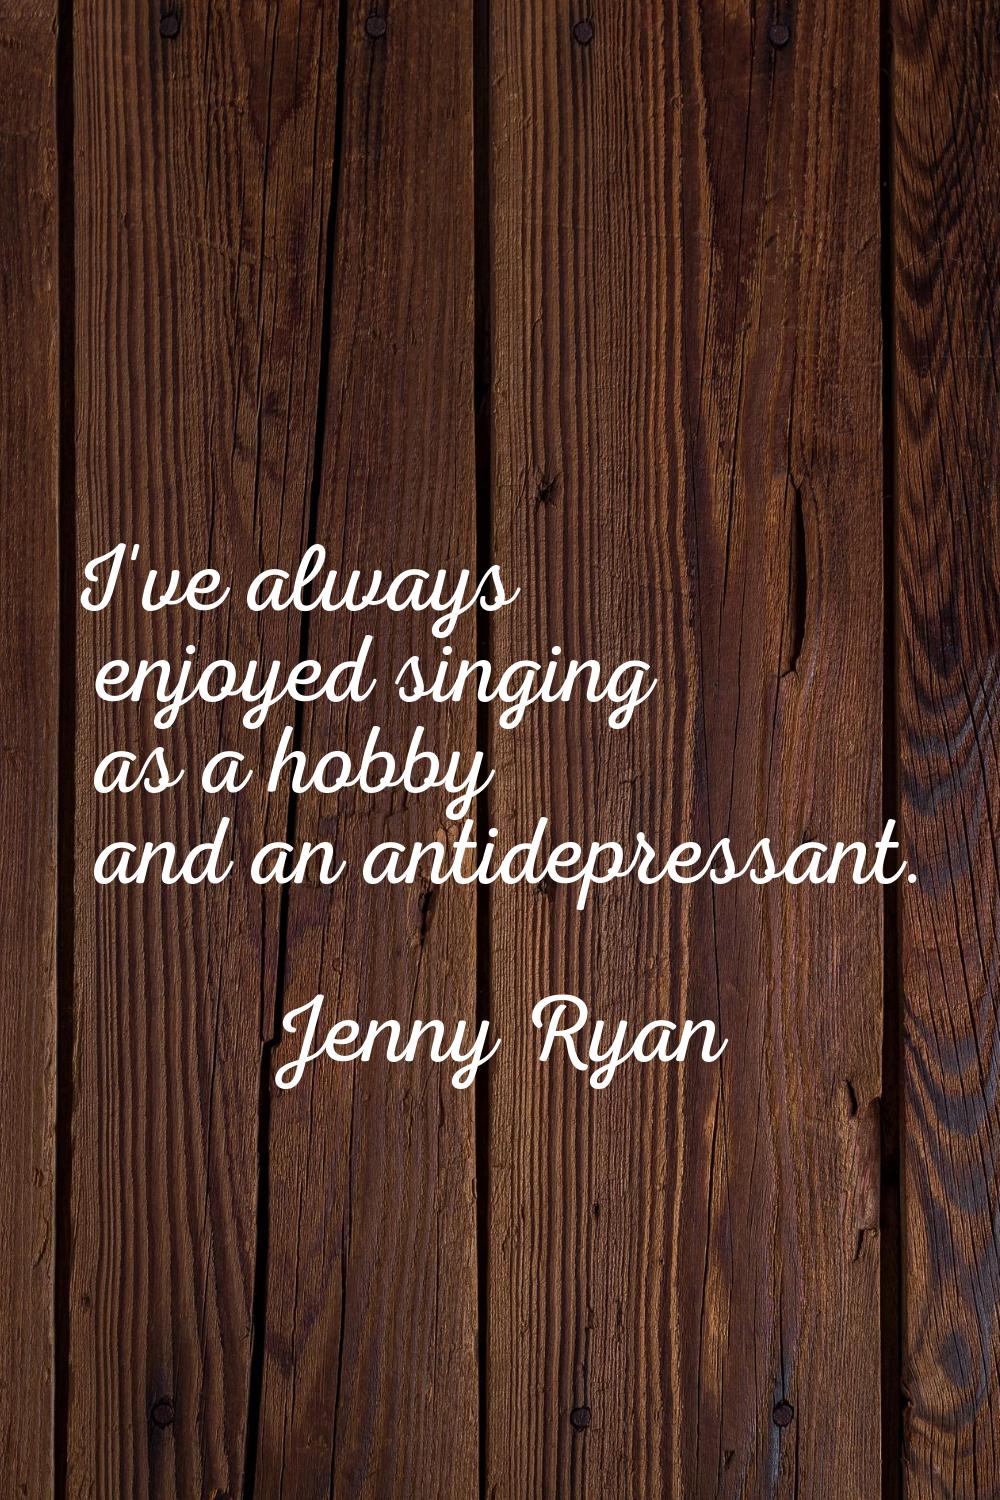 I've always enjoyed singing as a hobby and an antidepressant.